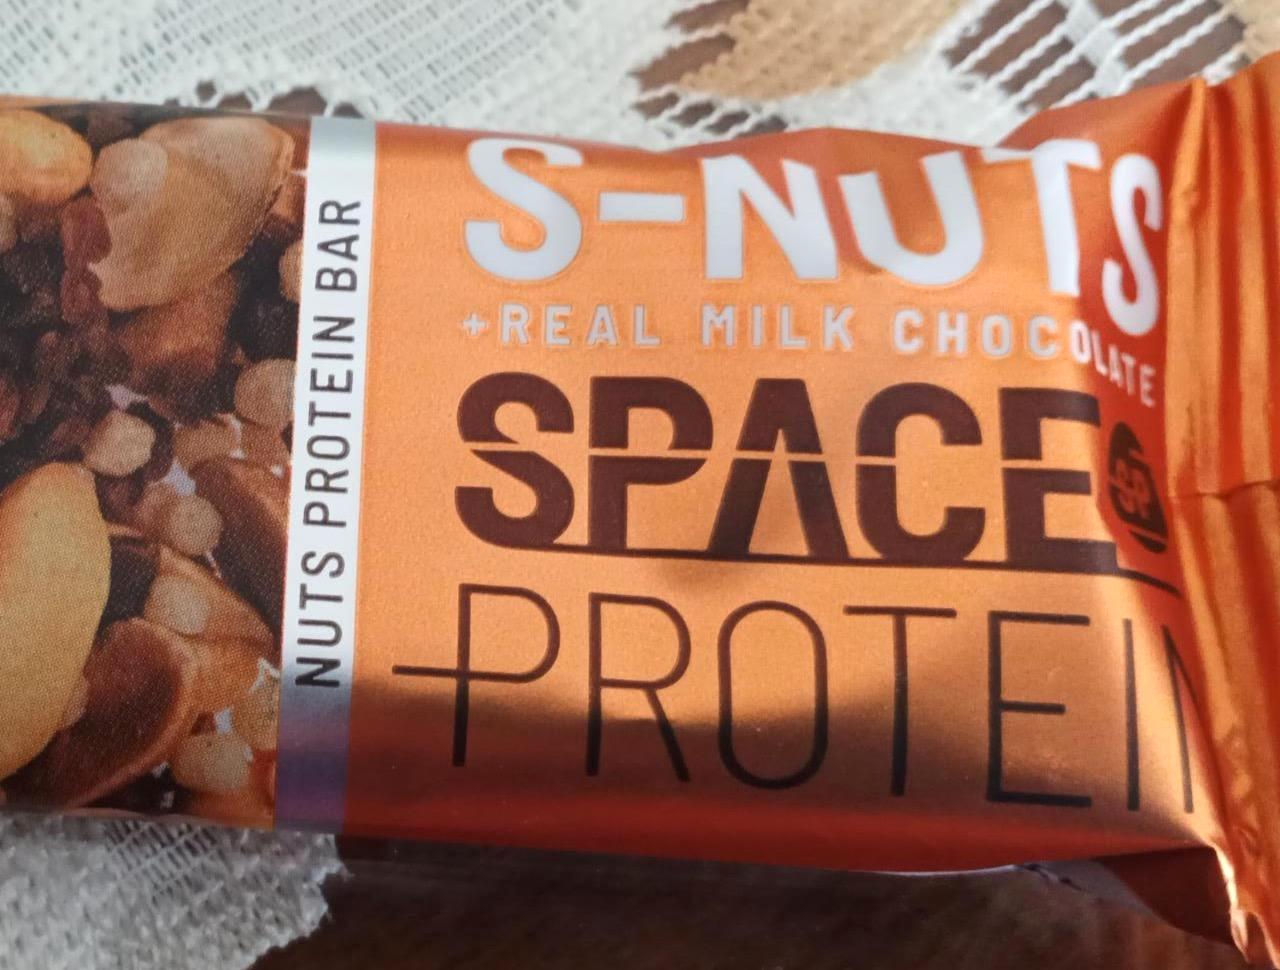 Képek - S-Nuts + real milk chocolate Space protein